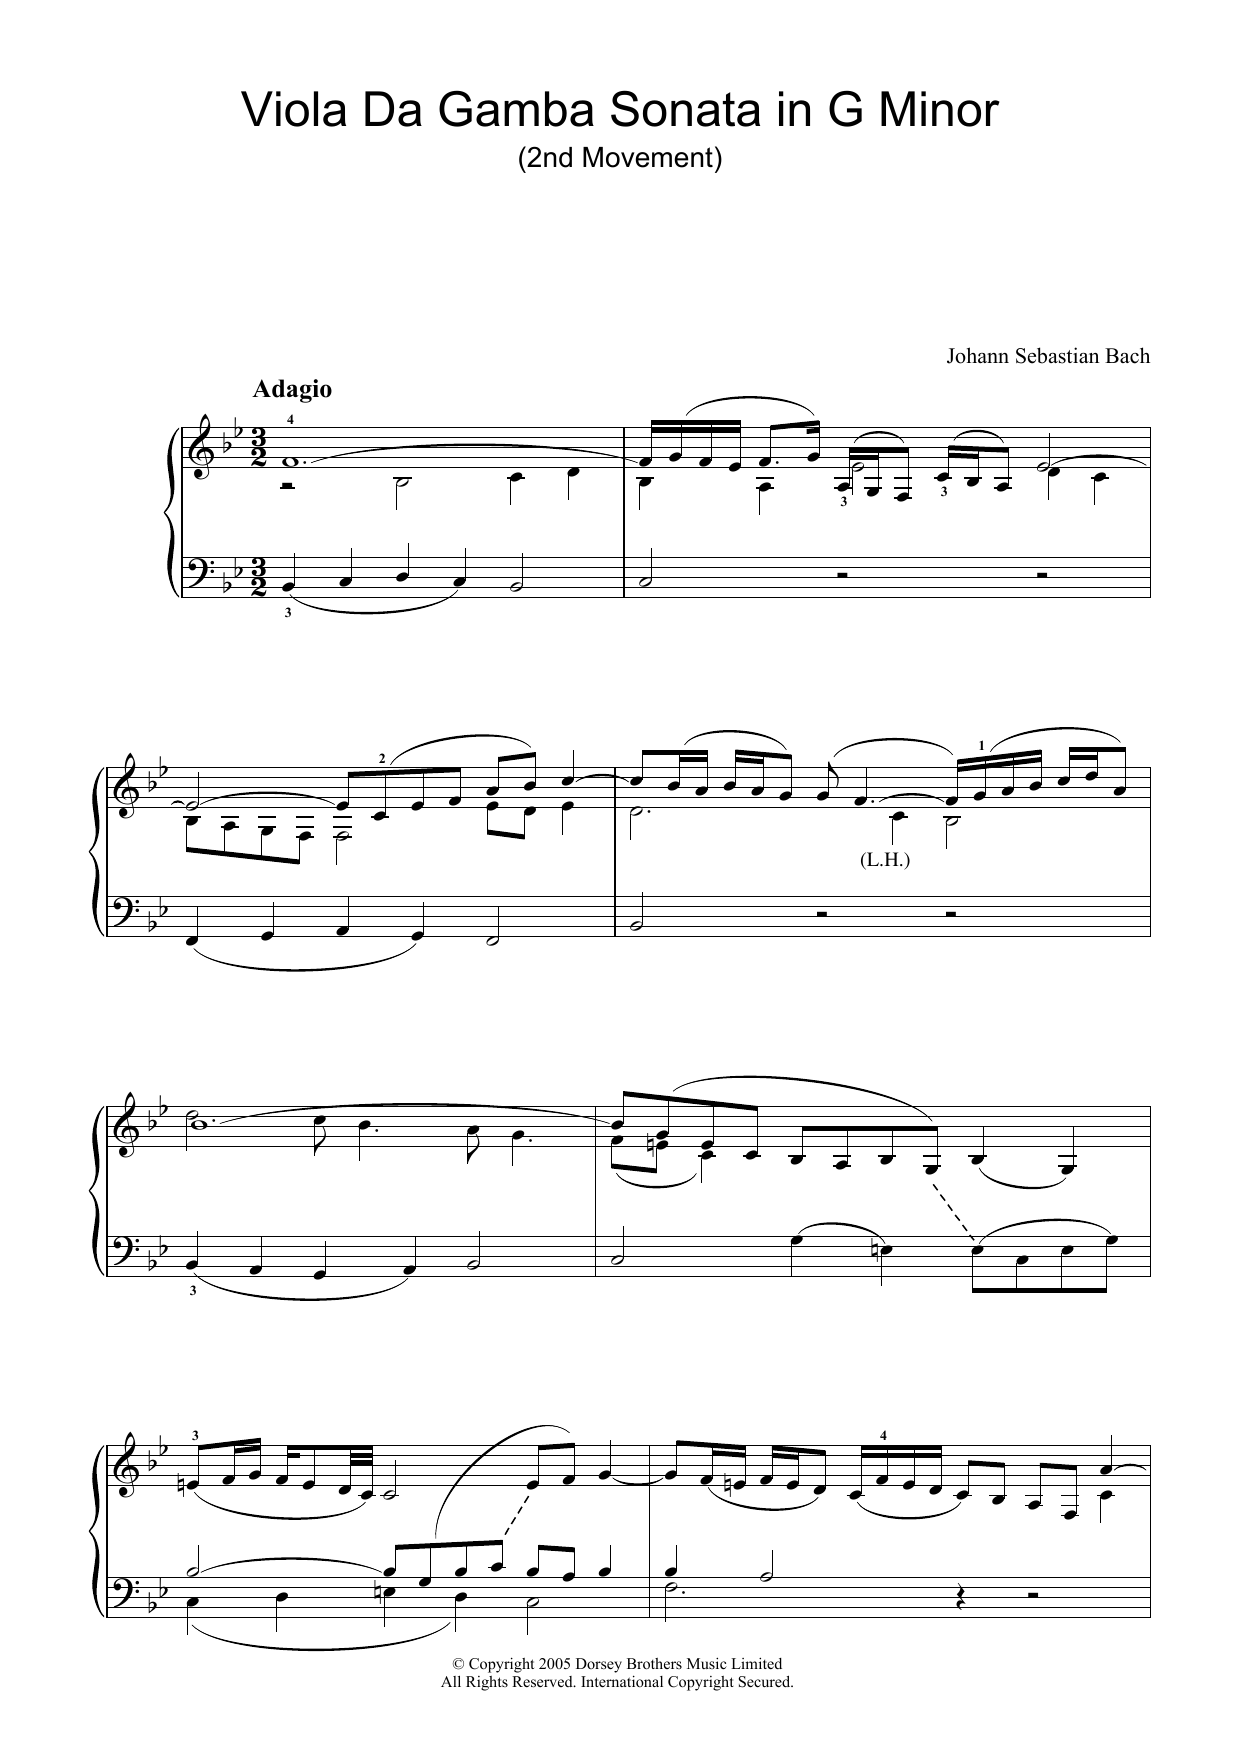 J.S. Bach Viola da Gamba Sonata In G Minor (2nd Movement) Sheet Music Notes & Chords for Piano - Download or Print PDF